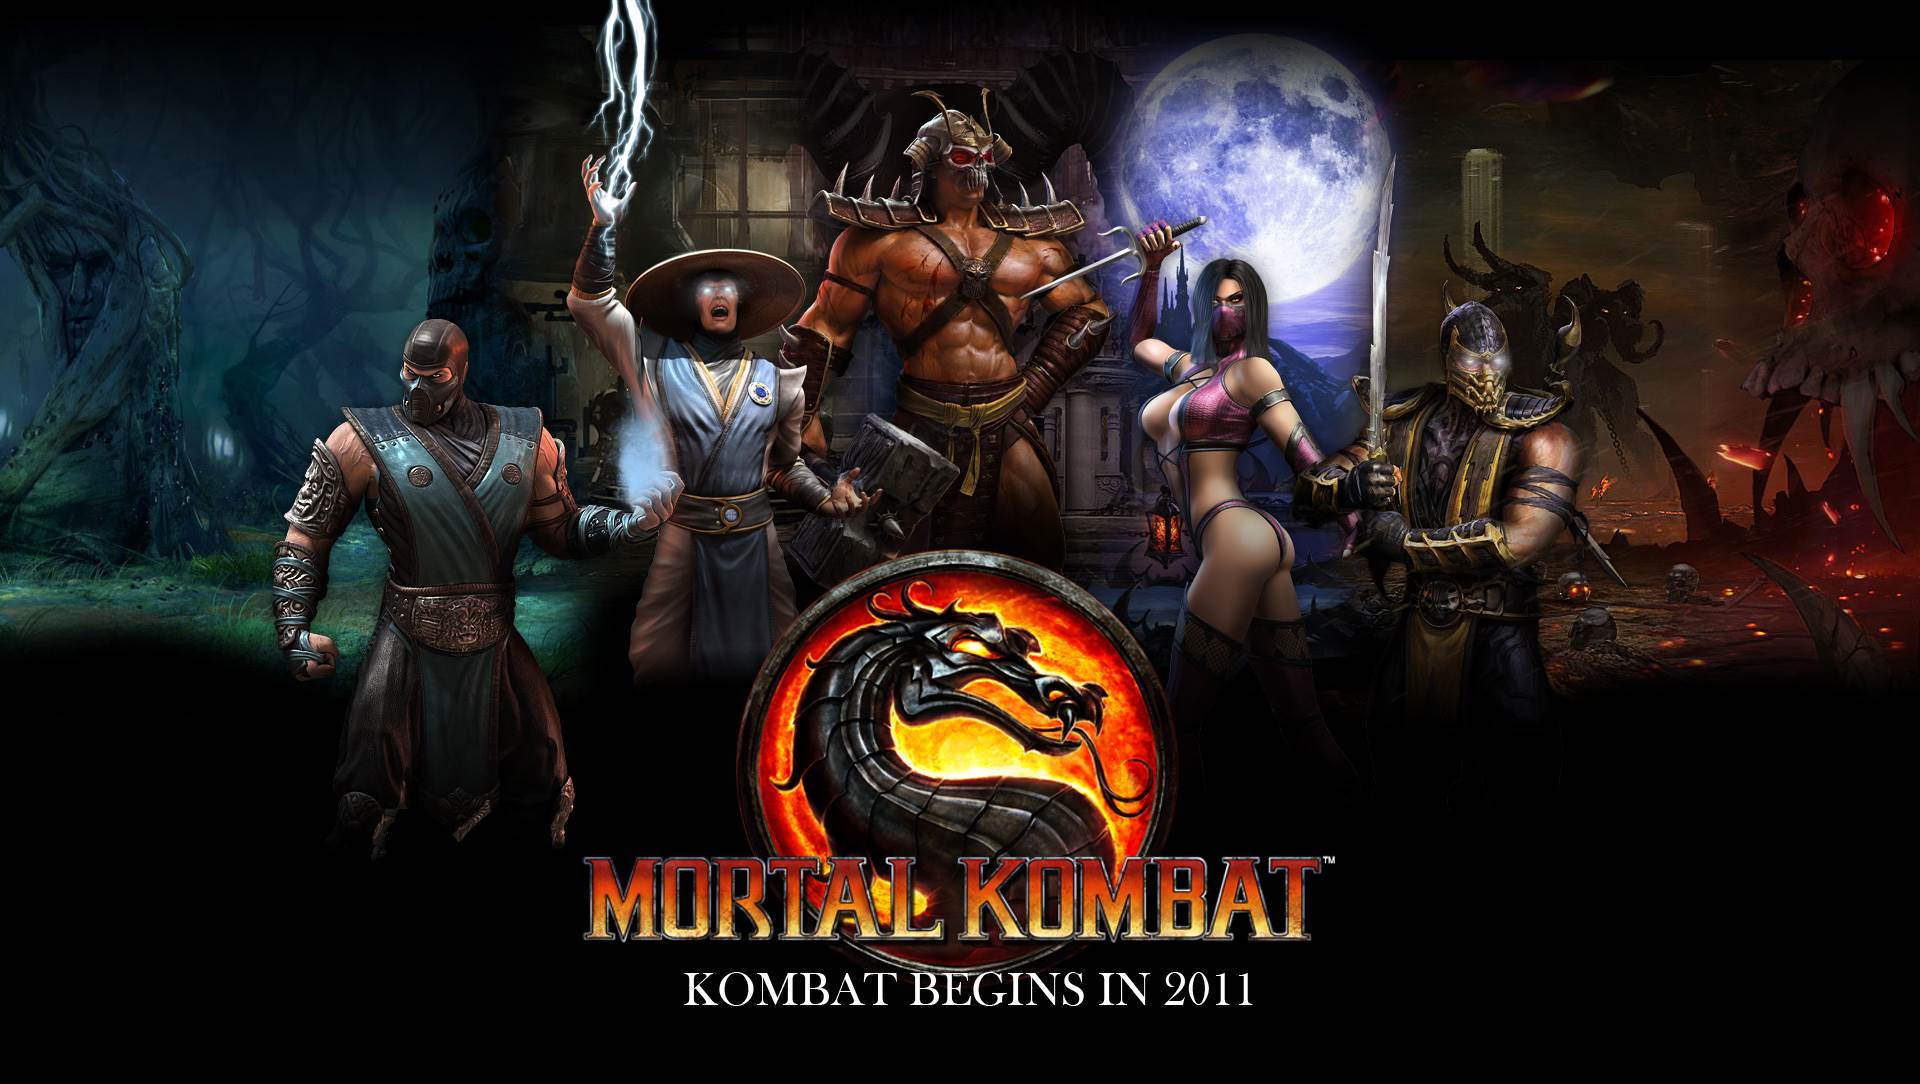 Mortal Kombat Sub Zero and Kitana wallpaper. 1920×1080 Imagenes De